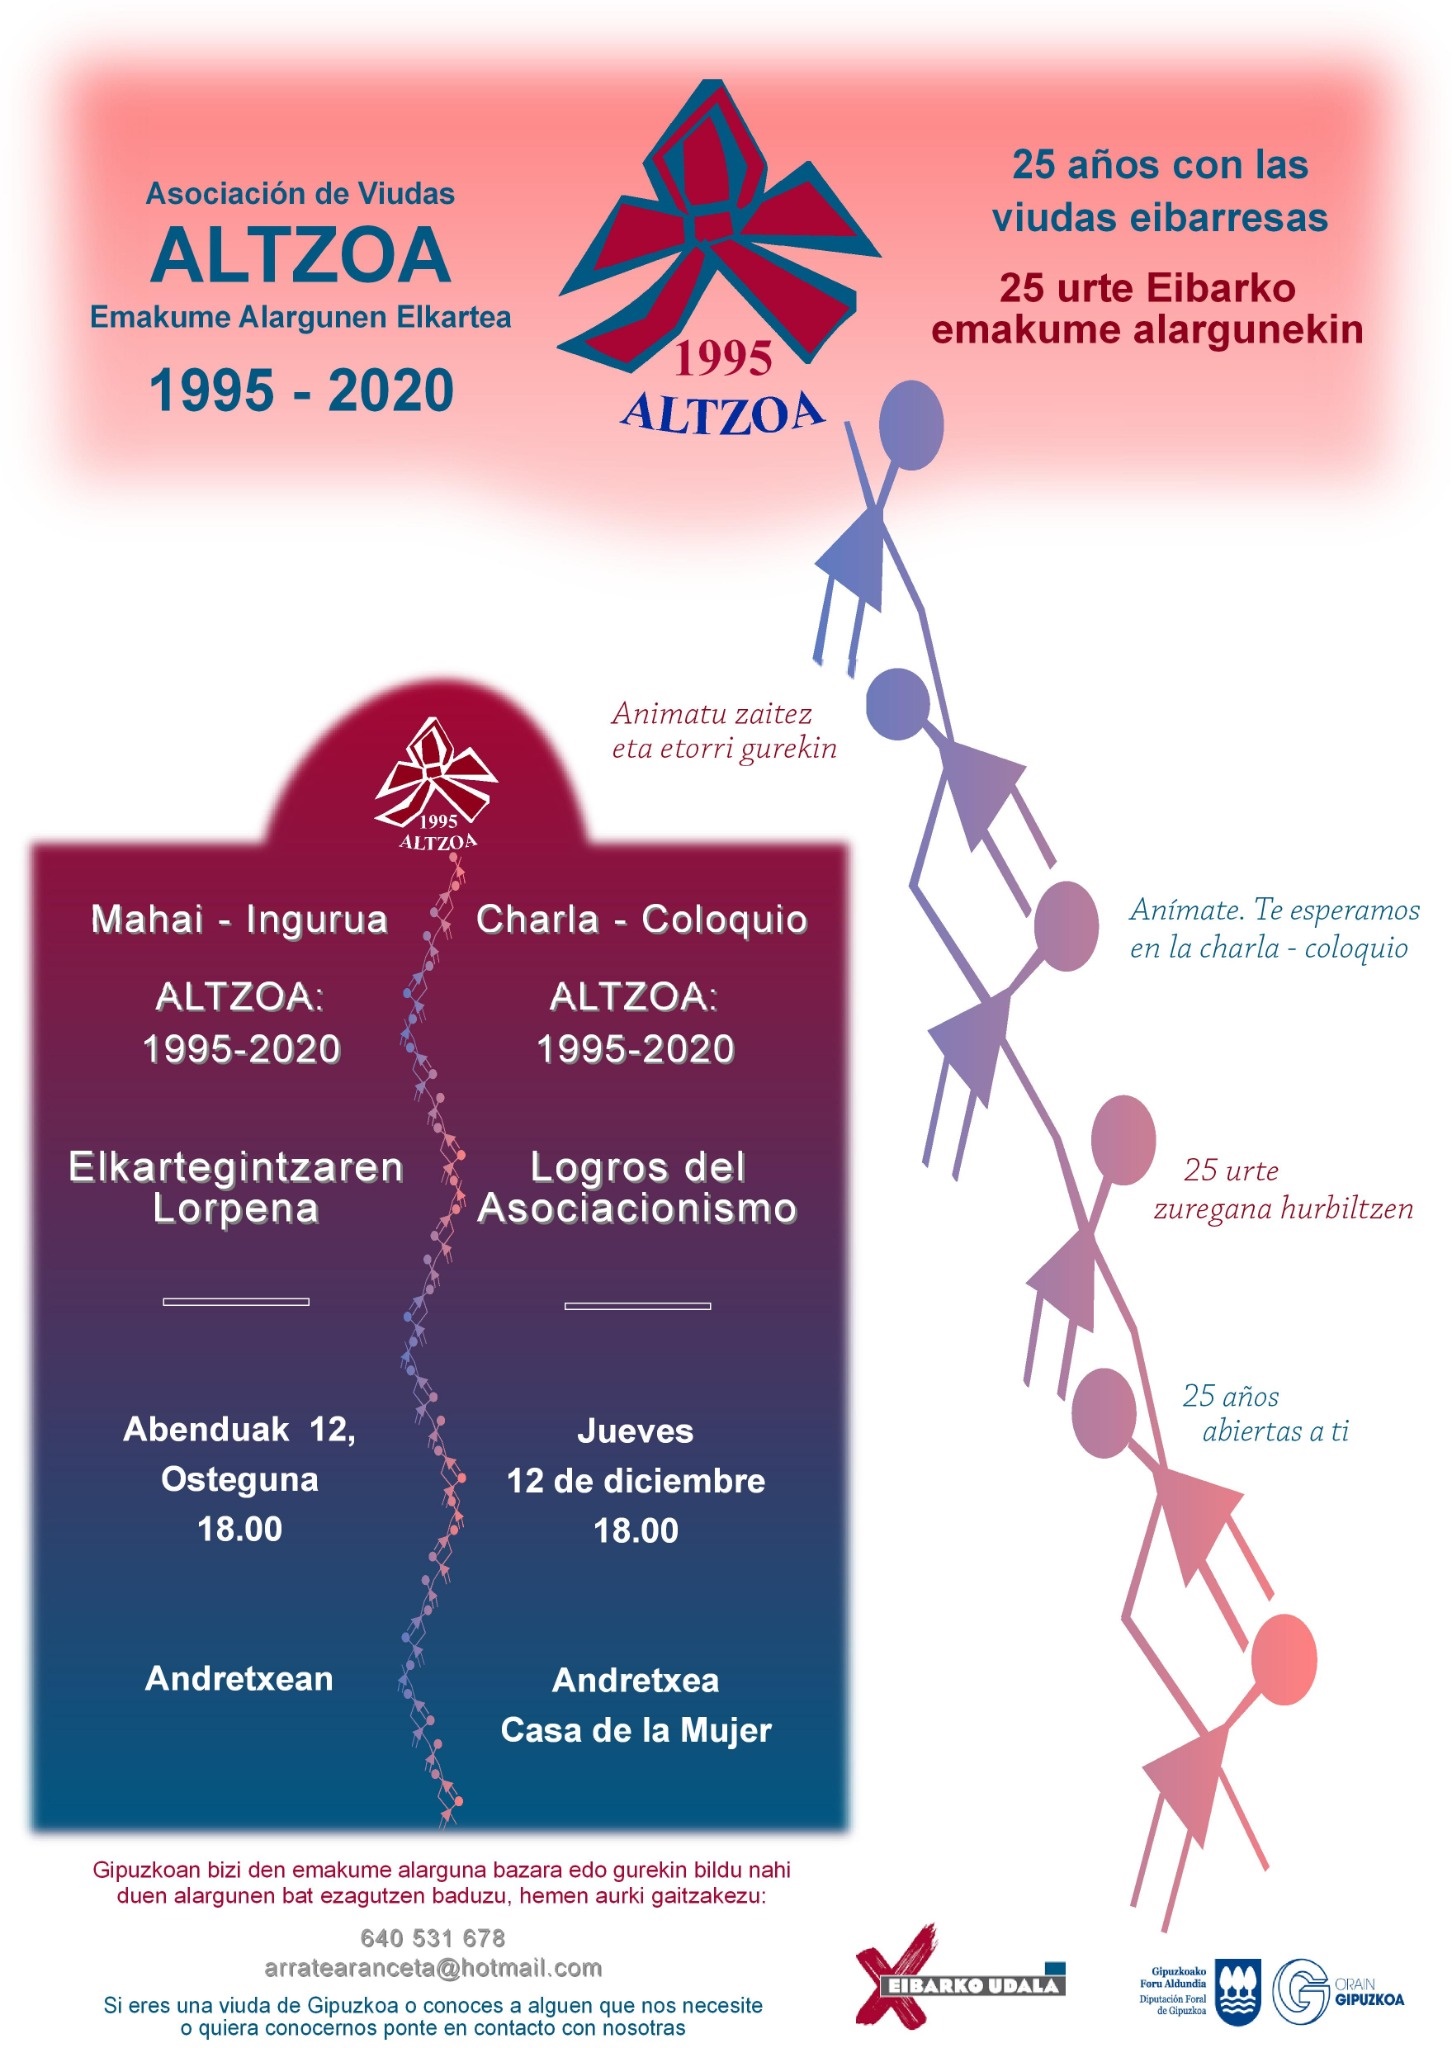 Charla-coloquio. Altzoa: 1995-2020. Logros del asociacionismo